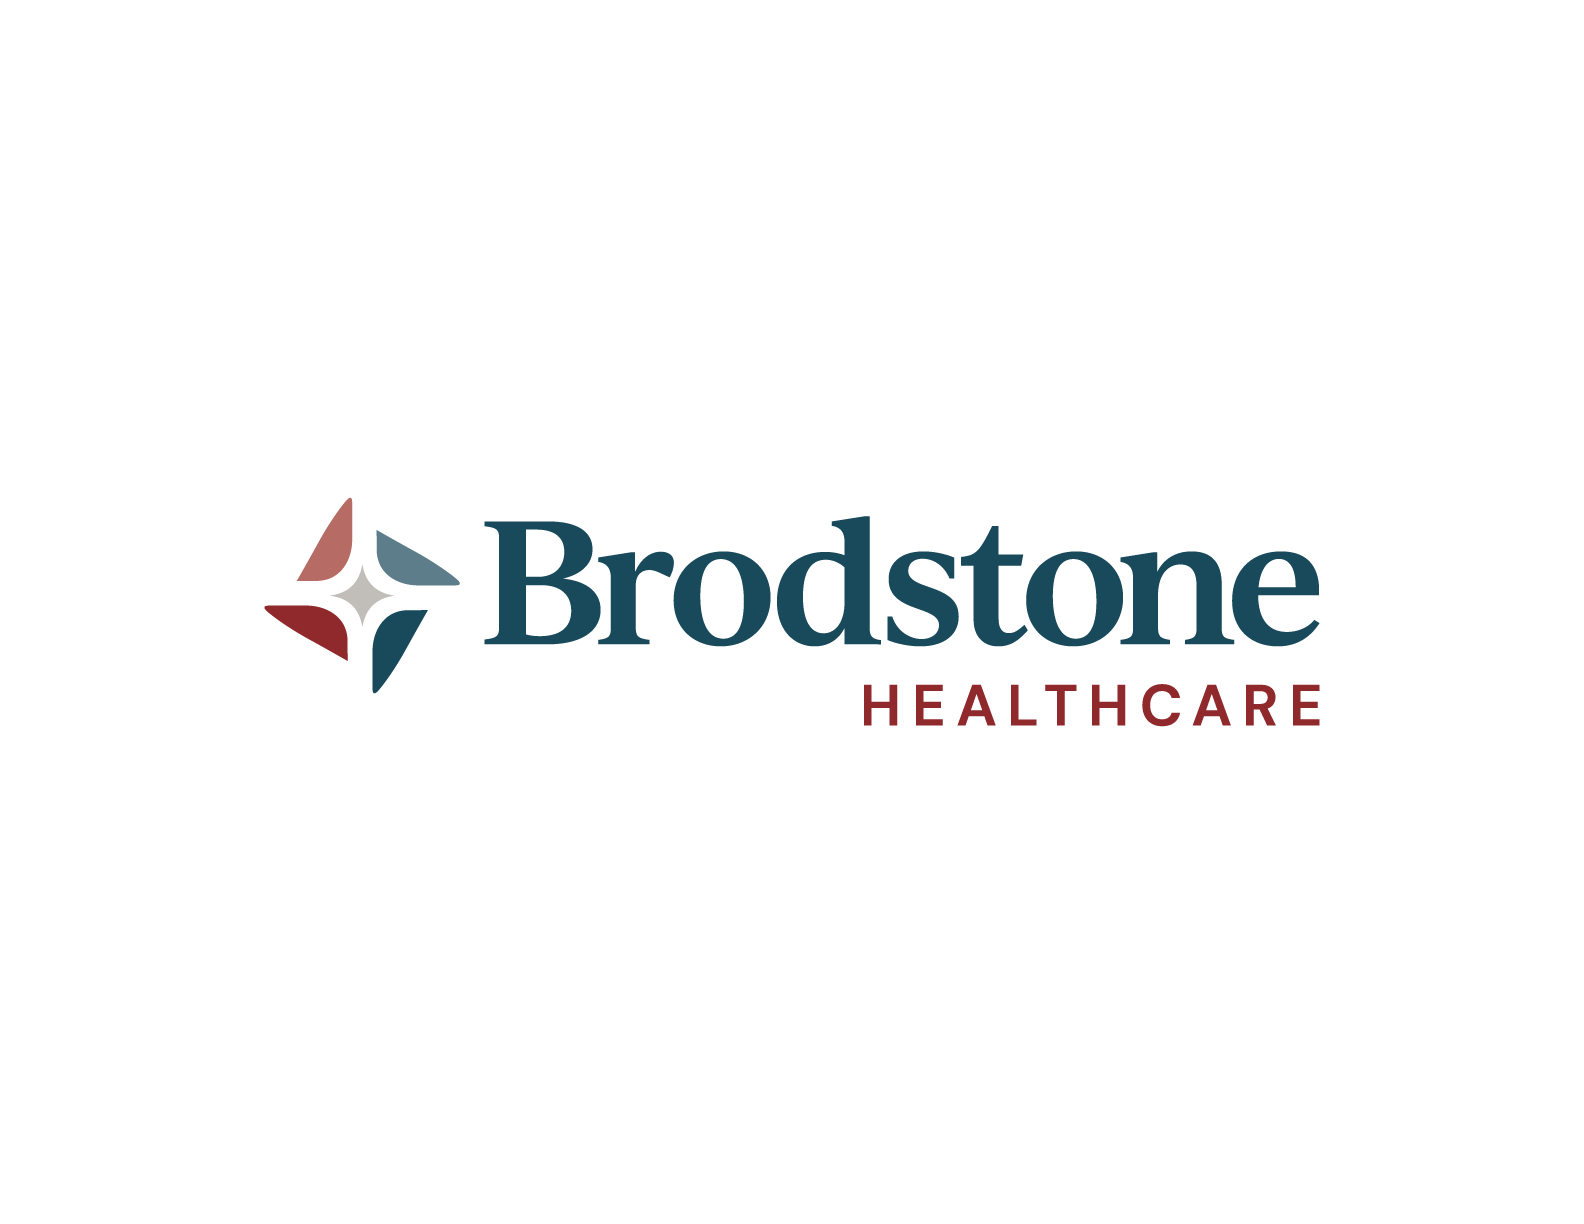 Brodstone Healthcare Brand Guide Logo